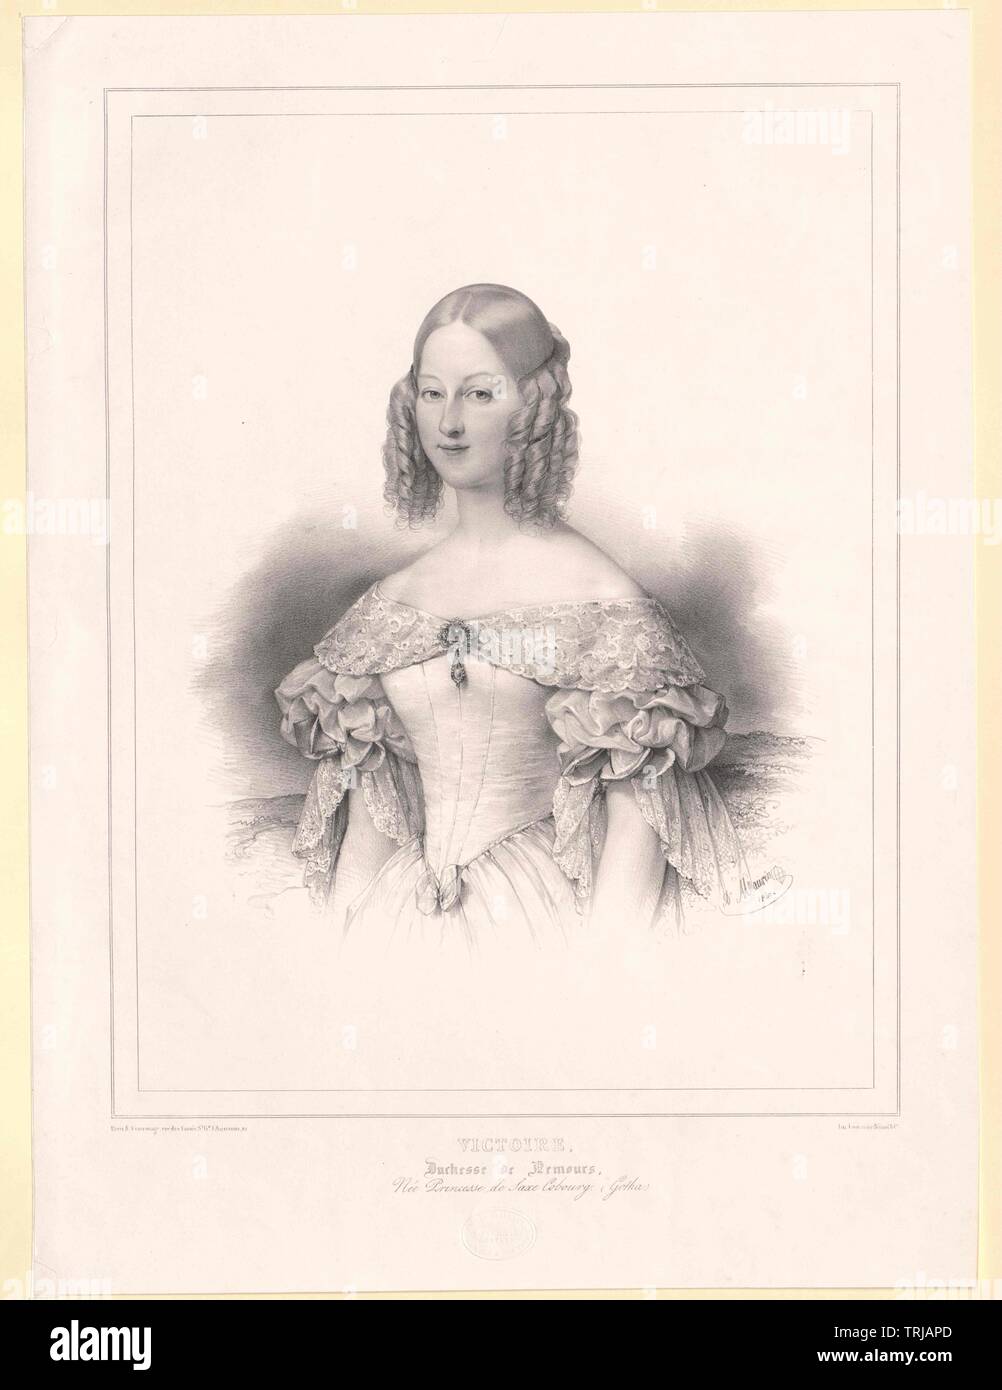 La princesa Victoria de Sajonia-Coburgo-Gotha, Additional-Rights-Clearance-Info-Not-Available Foto de stock